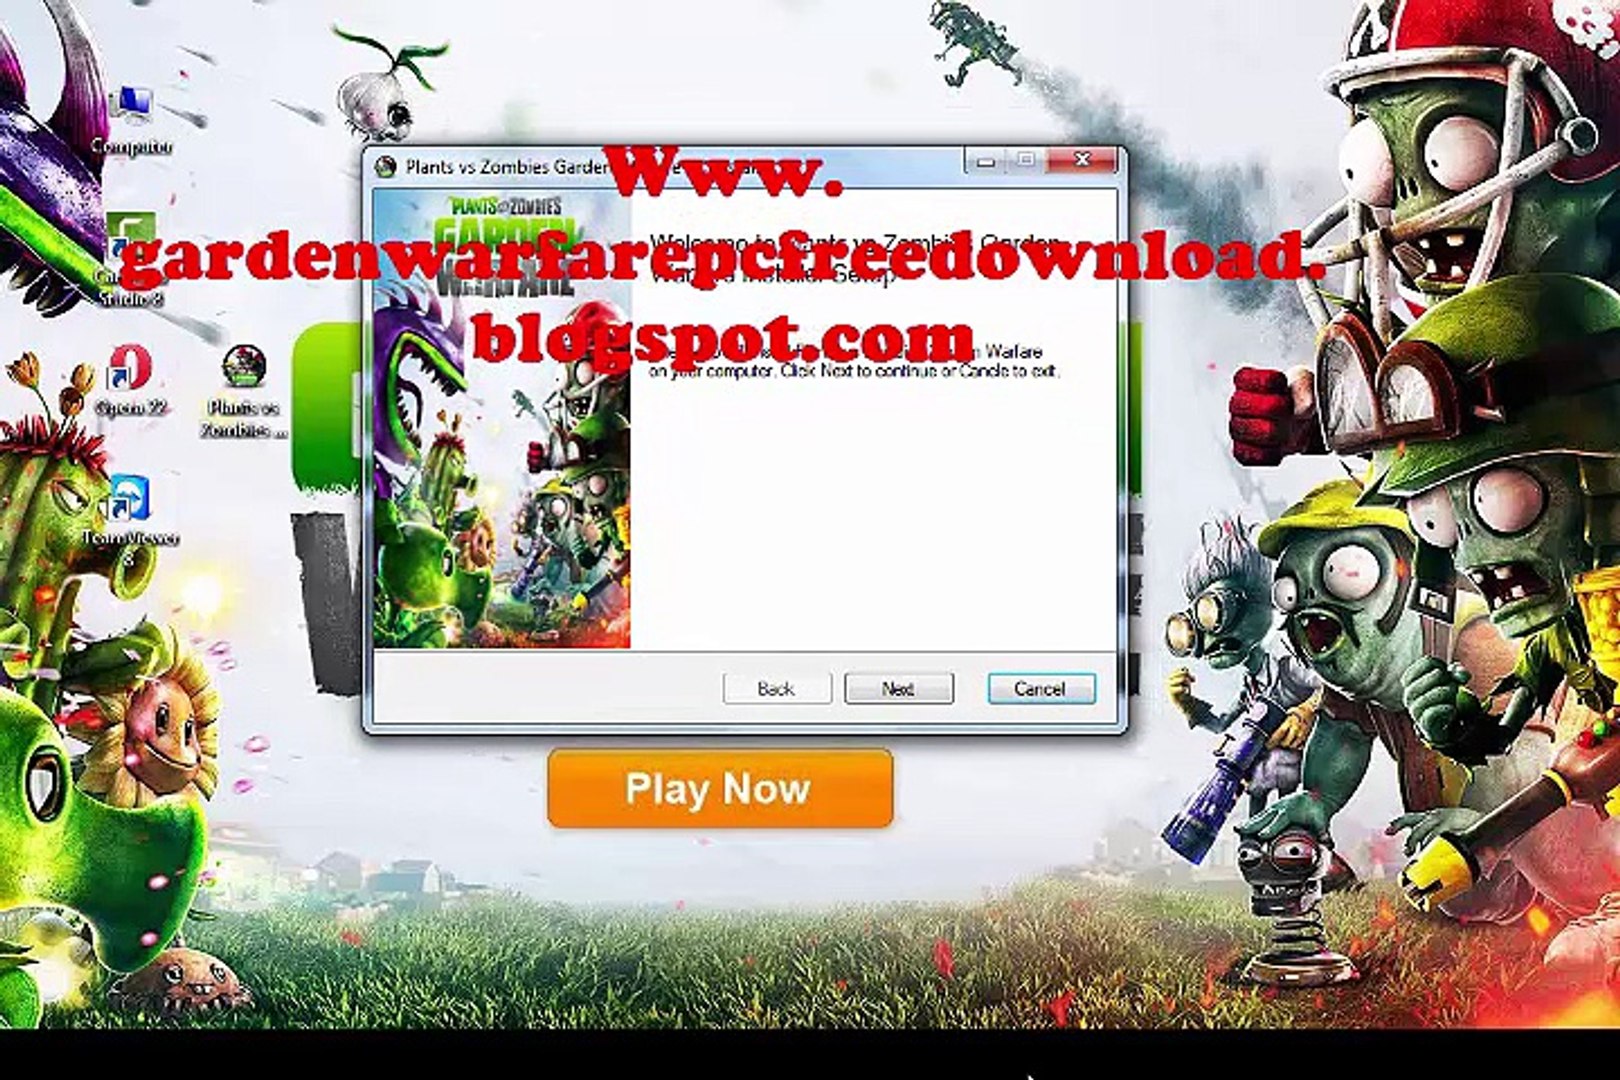 Plants vs. Zombies: Garden Warfare 2 PC Game - Free Download Full